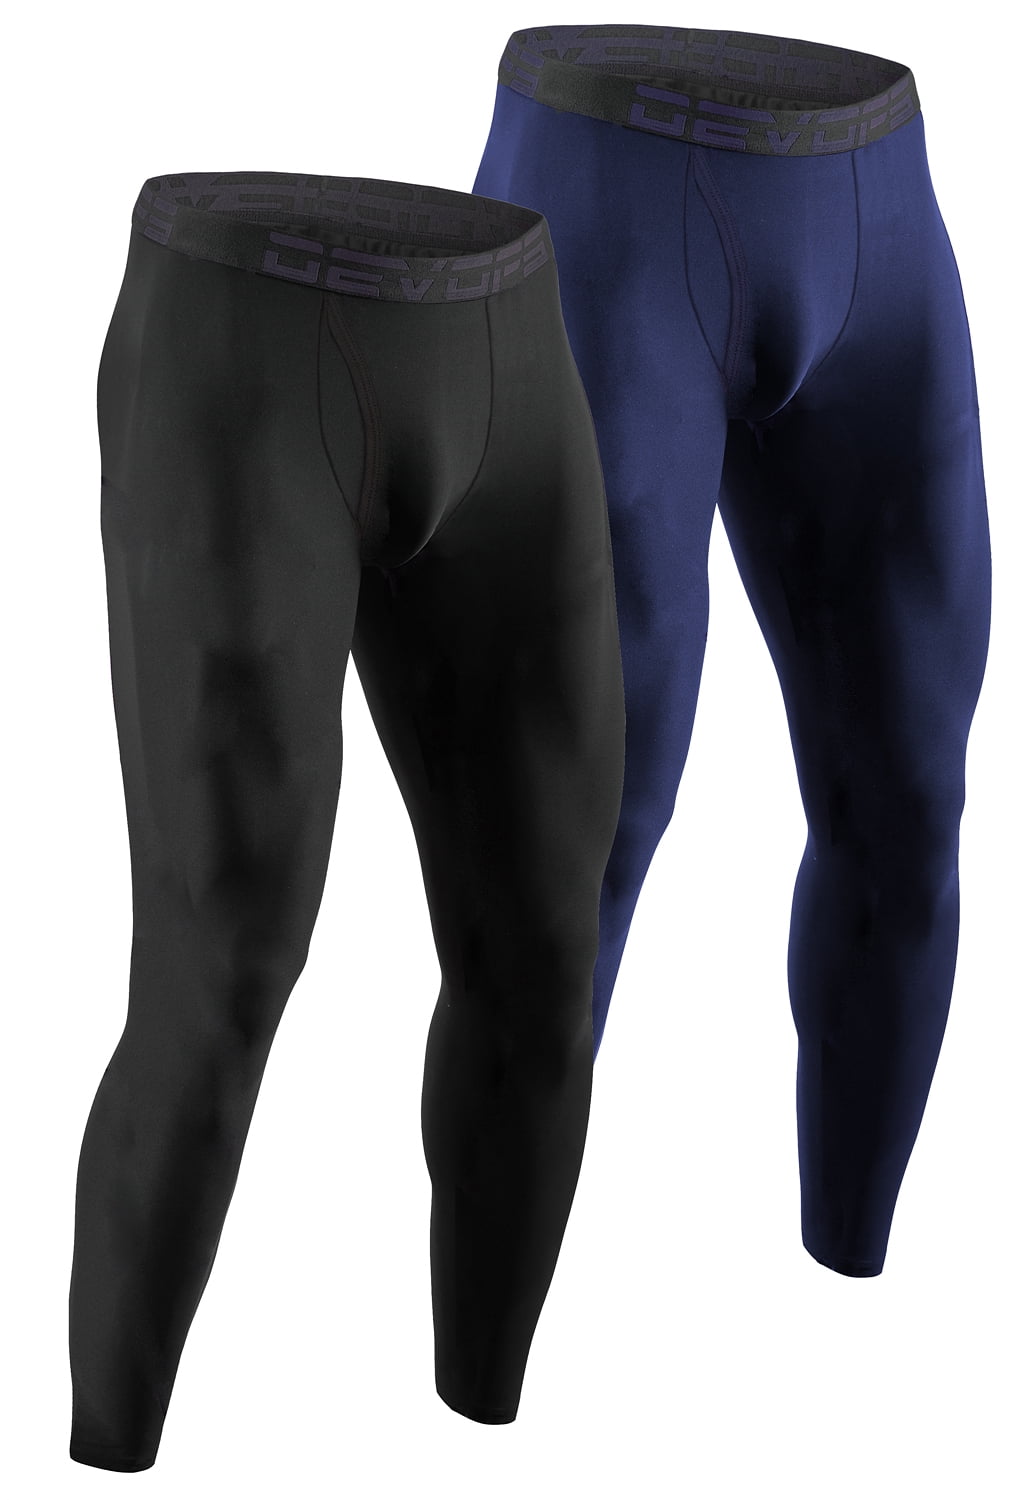 DEVOPS 3 Pack Boys UPF 50+ Compression Tights Sport Leggings Baselayer  Pants (X-Small, Black/Charcoal/White) 